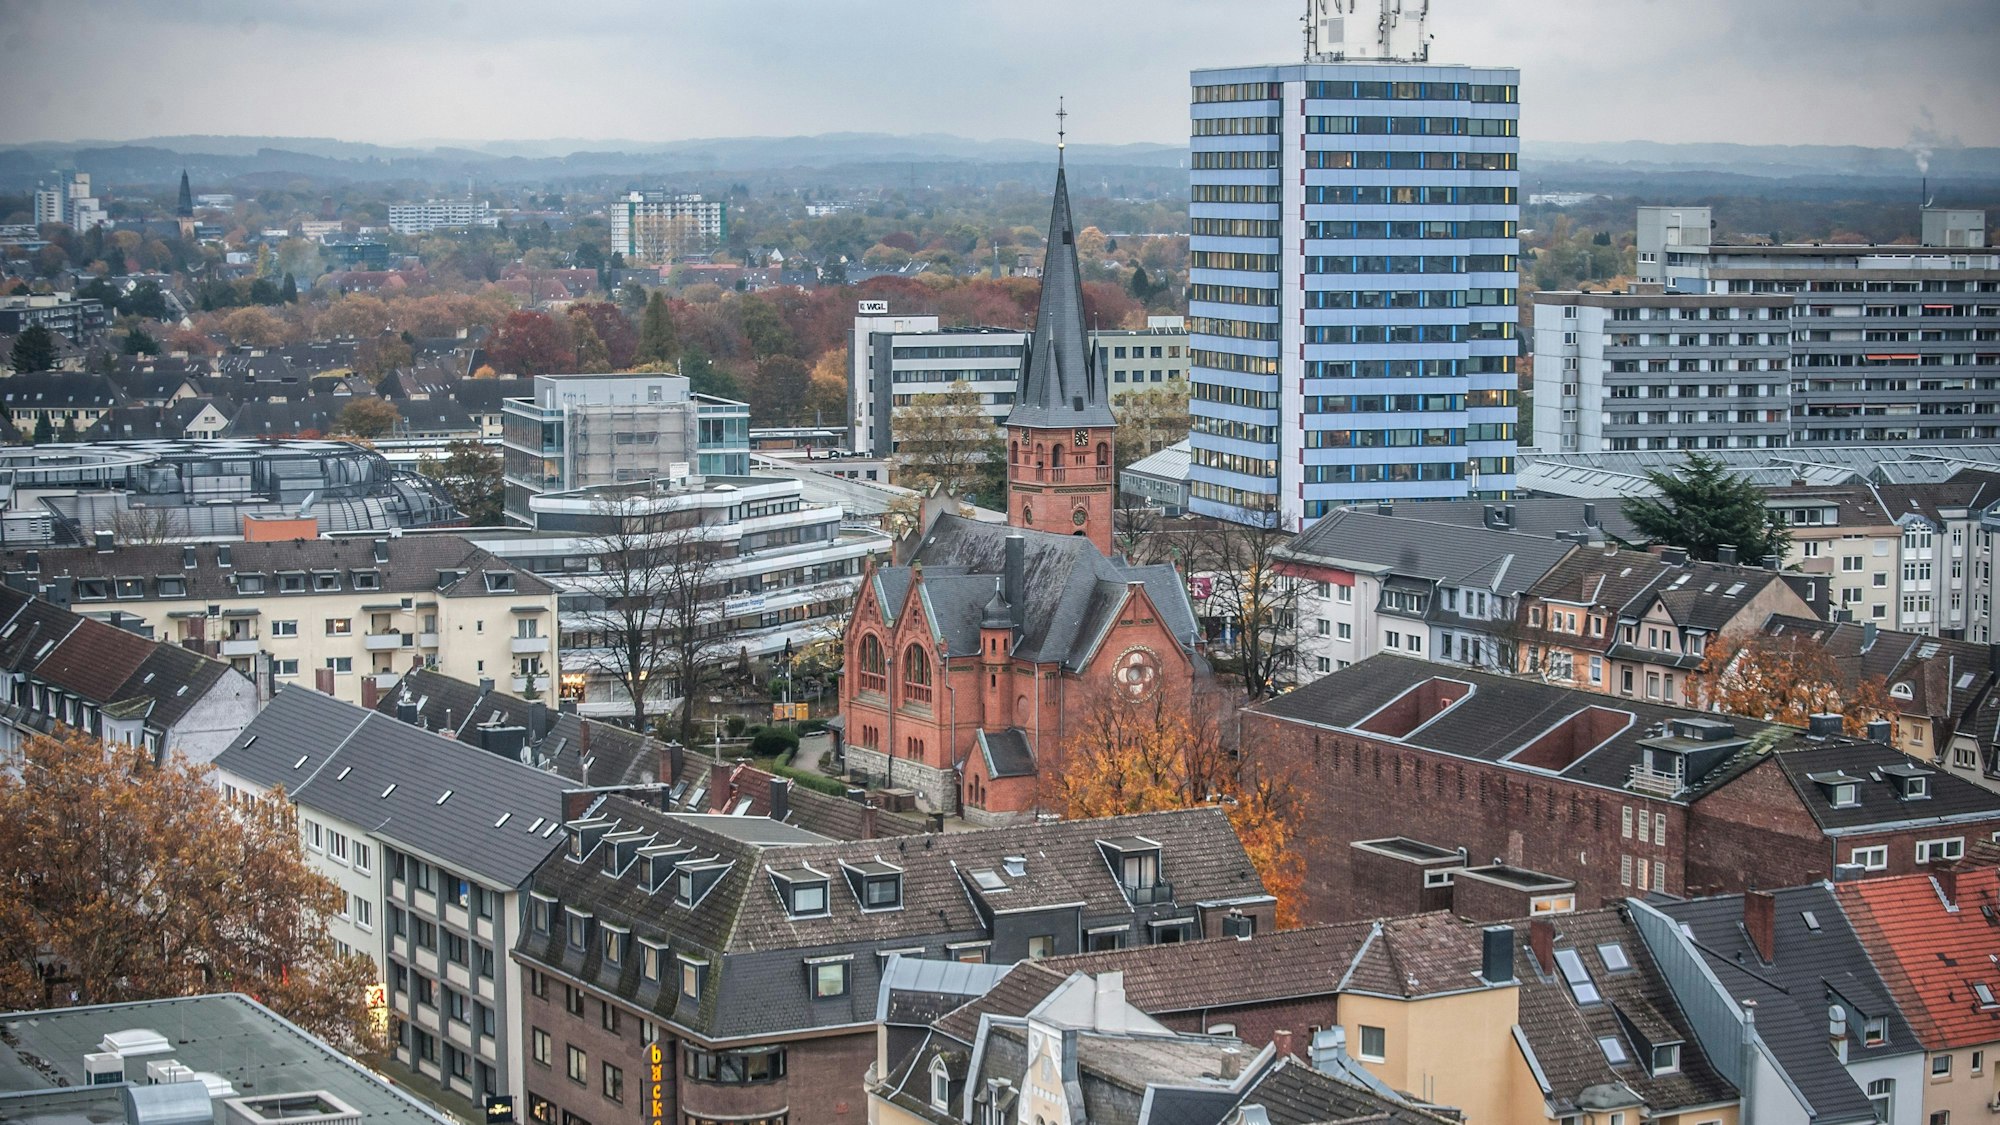 Stadtansicht Wiesdorf mit Christuskirche, Wiesdorfer Platz, City A und Ärztehochhaus  Ärzteturm Foto: Ralf Krieger